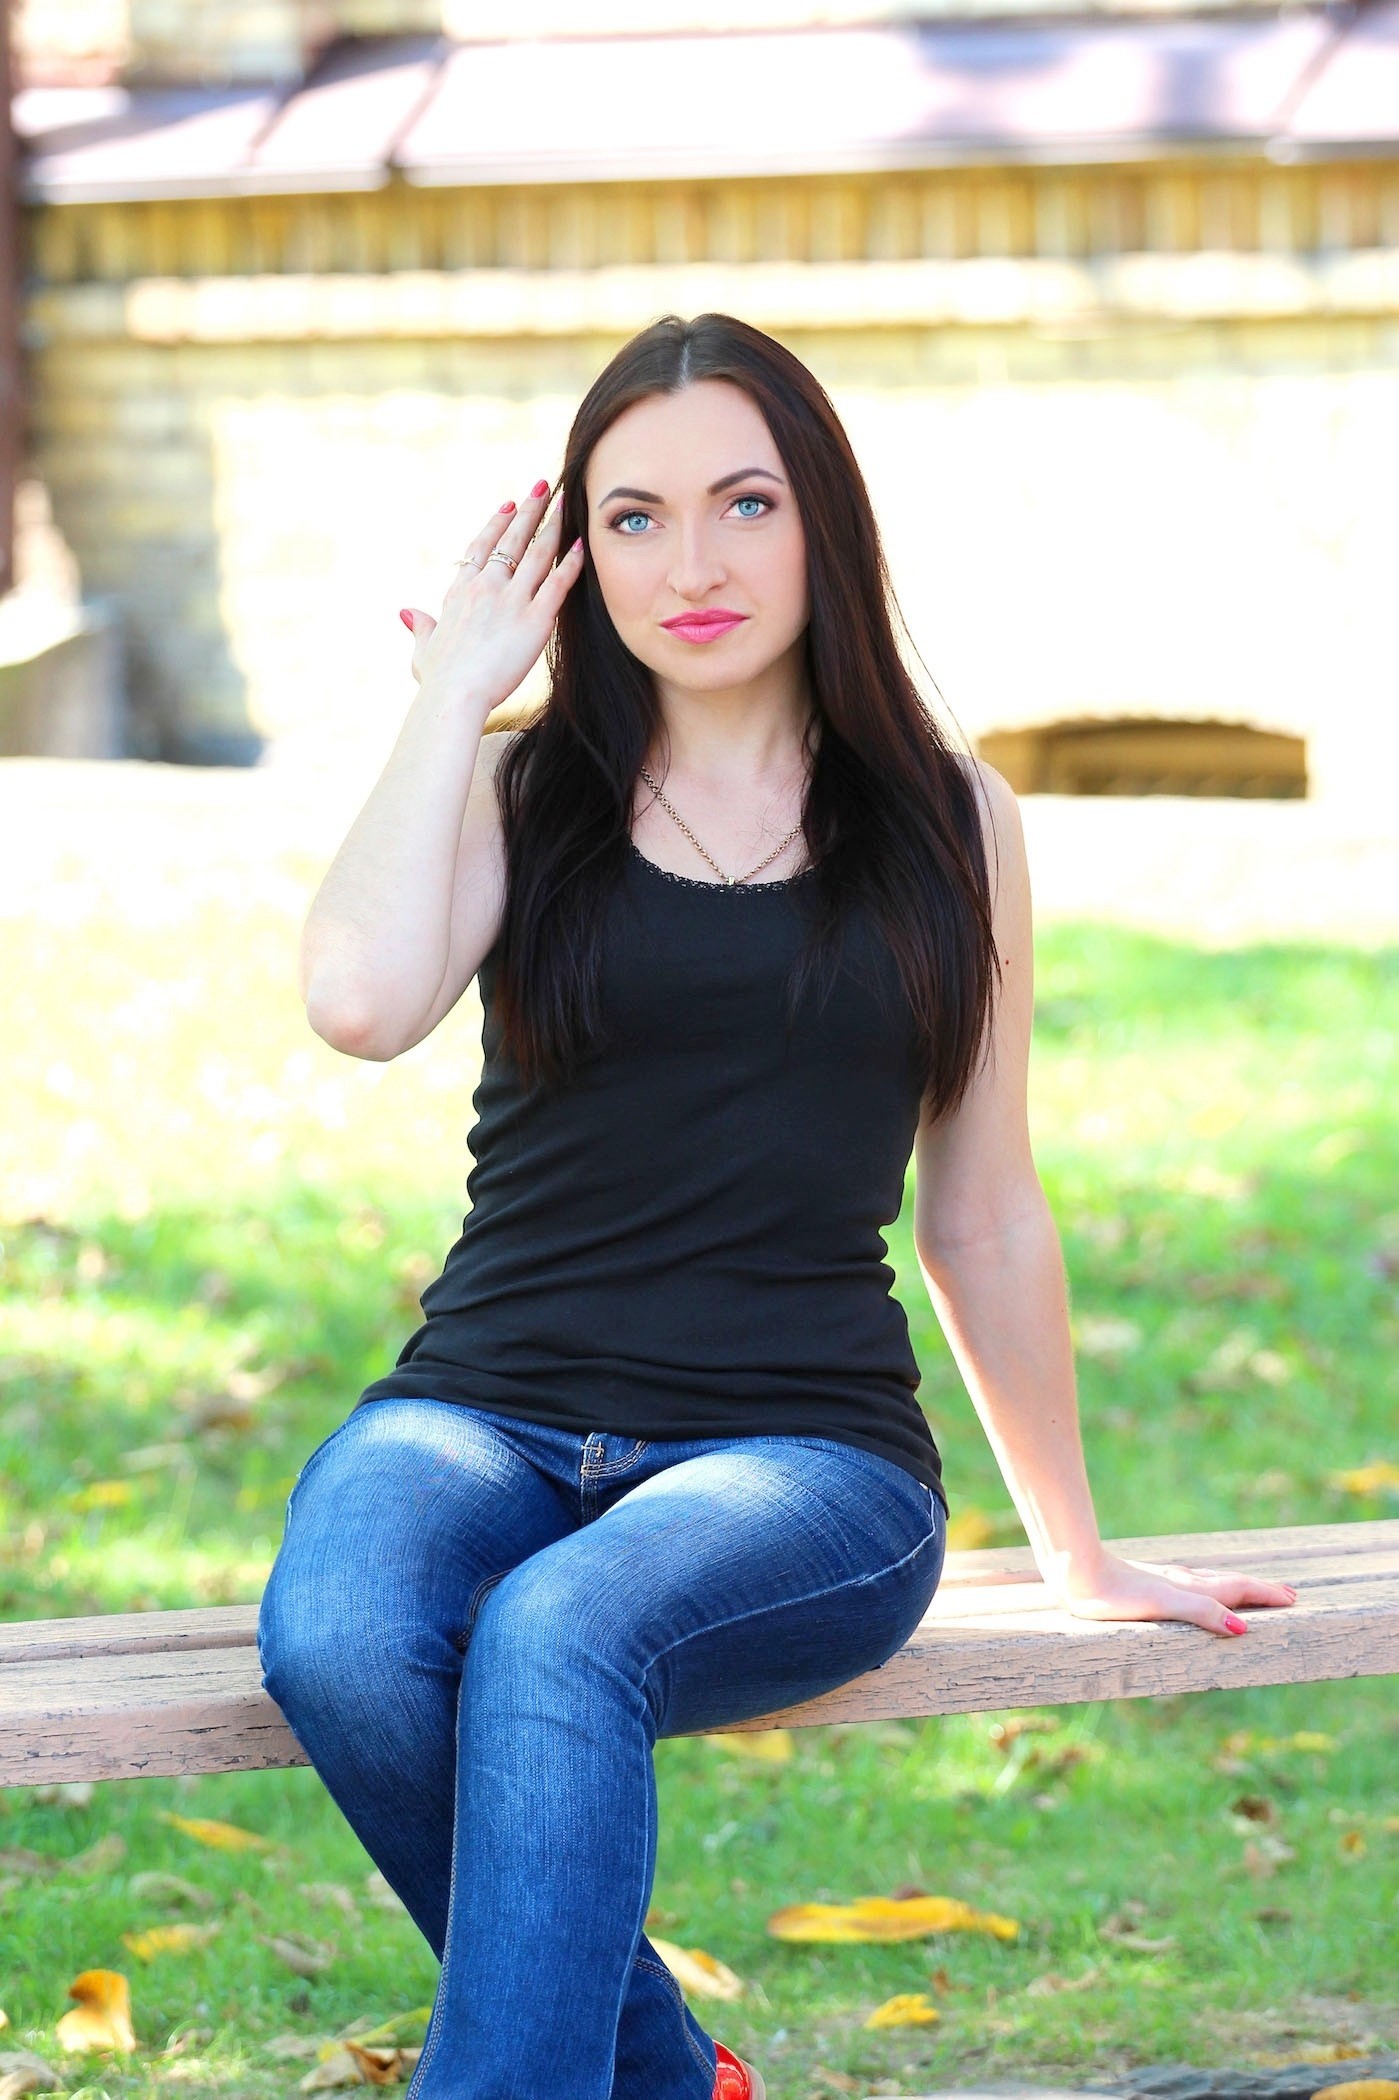 Ukrainian Single: Alina blue eyes, 36 years old | ID176142